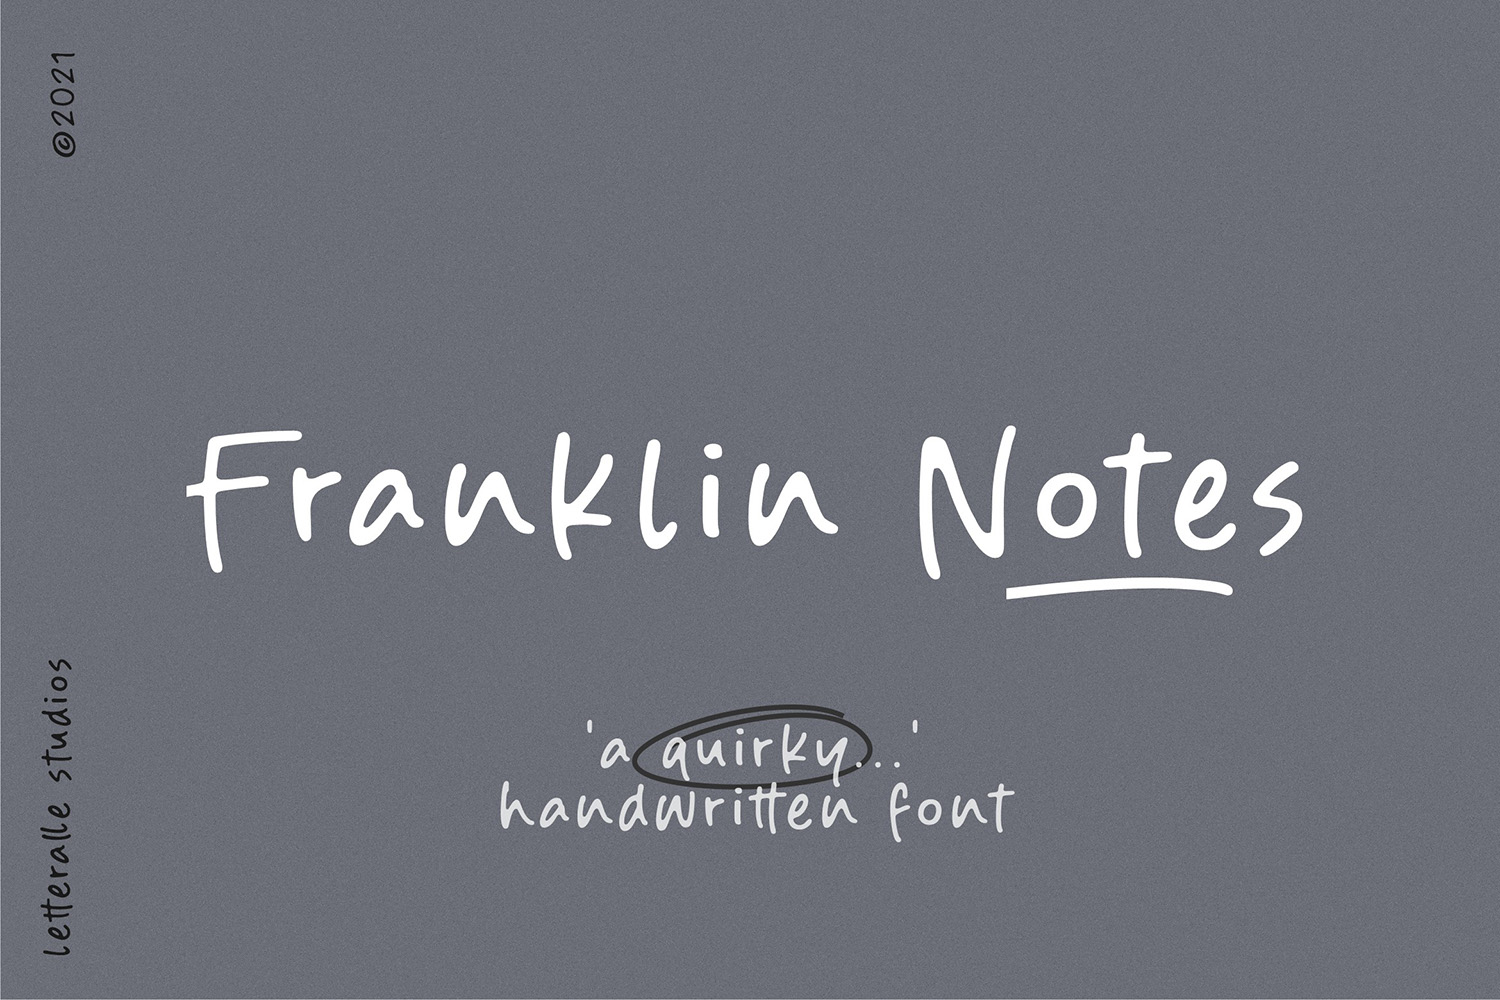 Franklin Notes Free Font